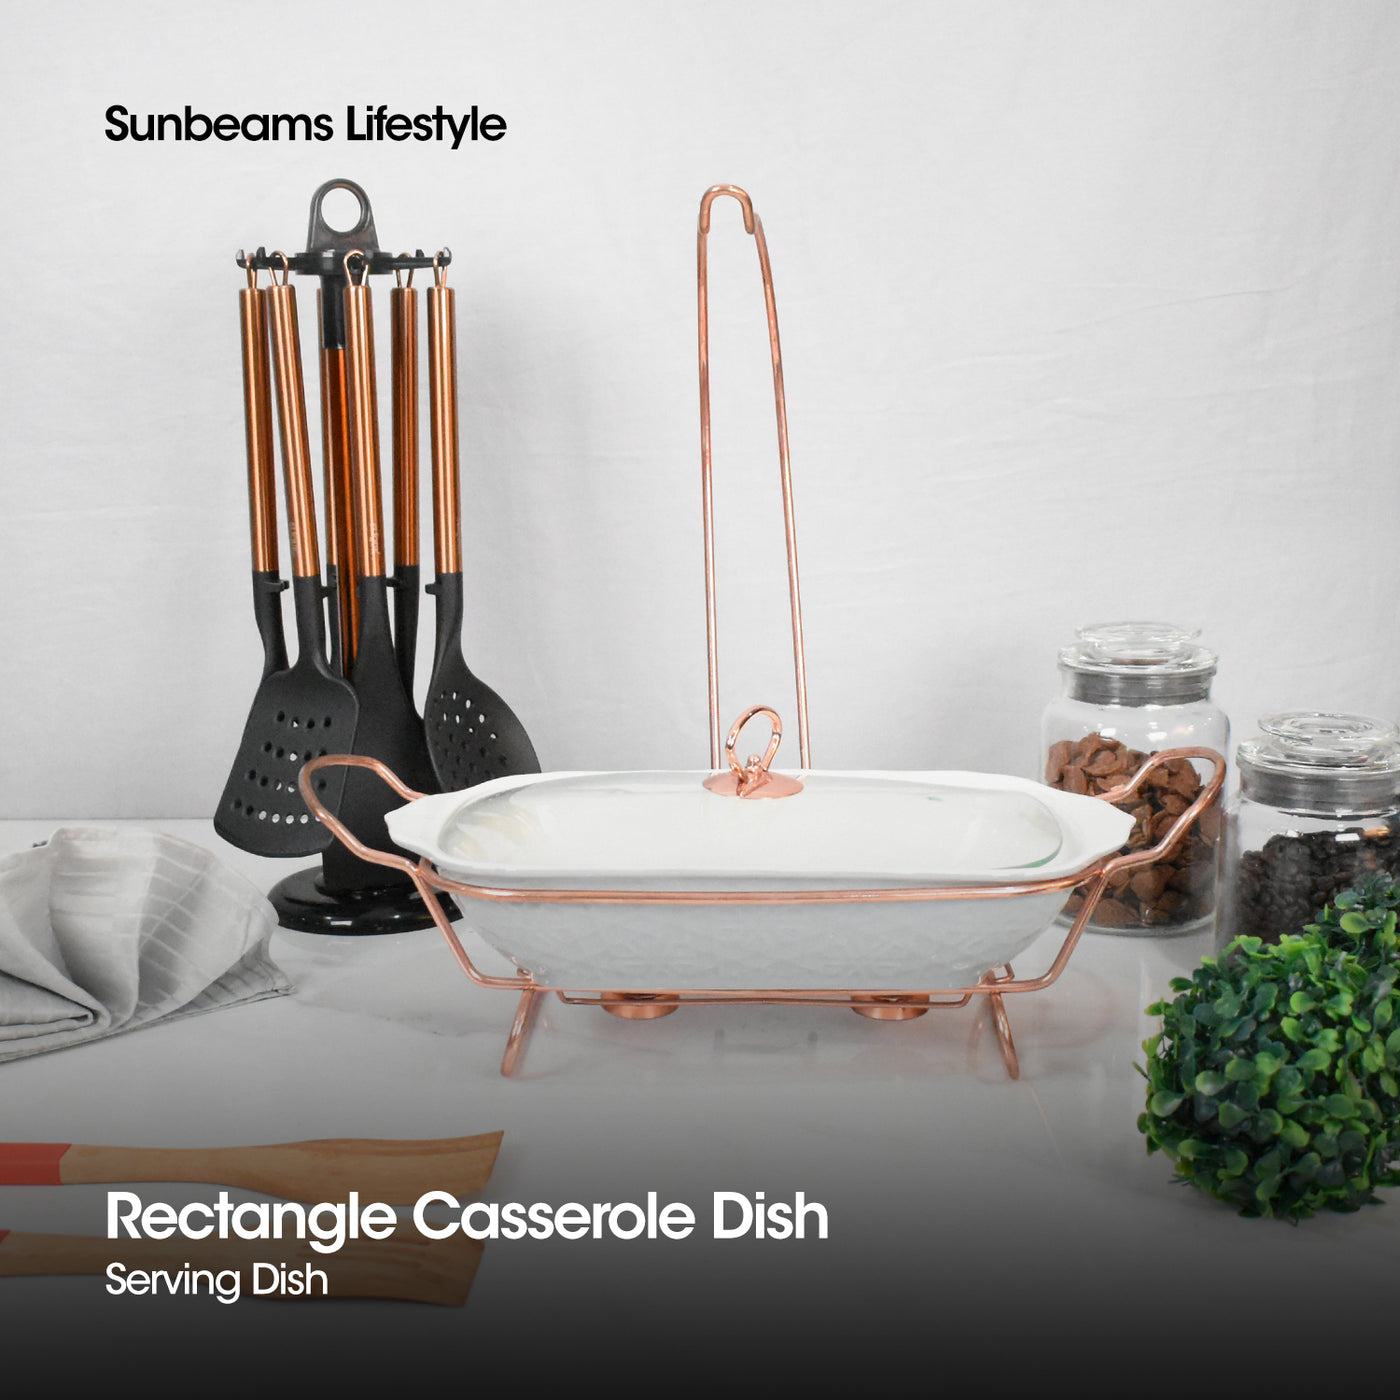 SLIQUE Premium Ceramic Rectangular Casserole Dish and Rosegold Plated Metal Tealight Candle Holder 1800ml